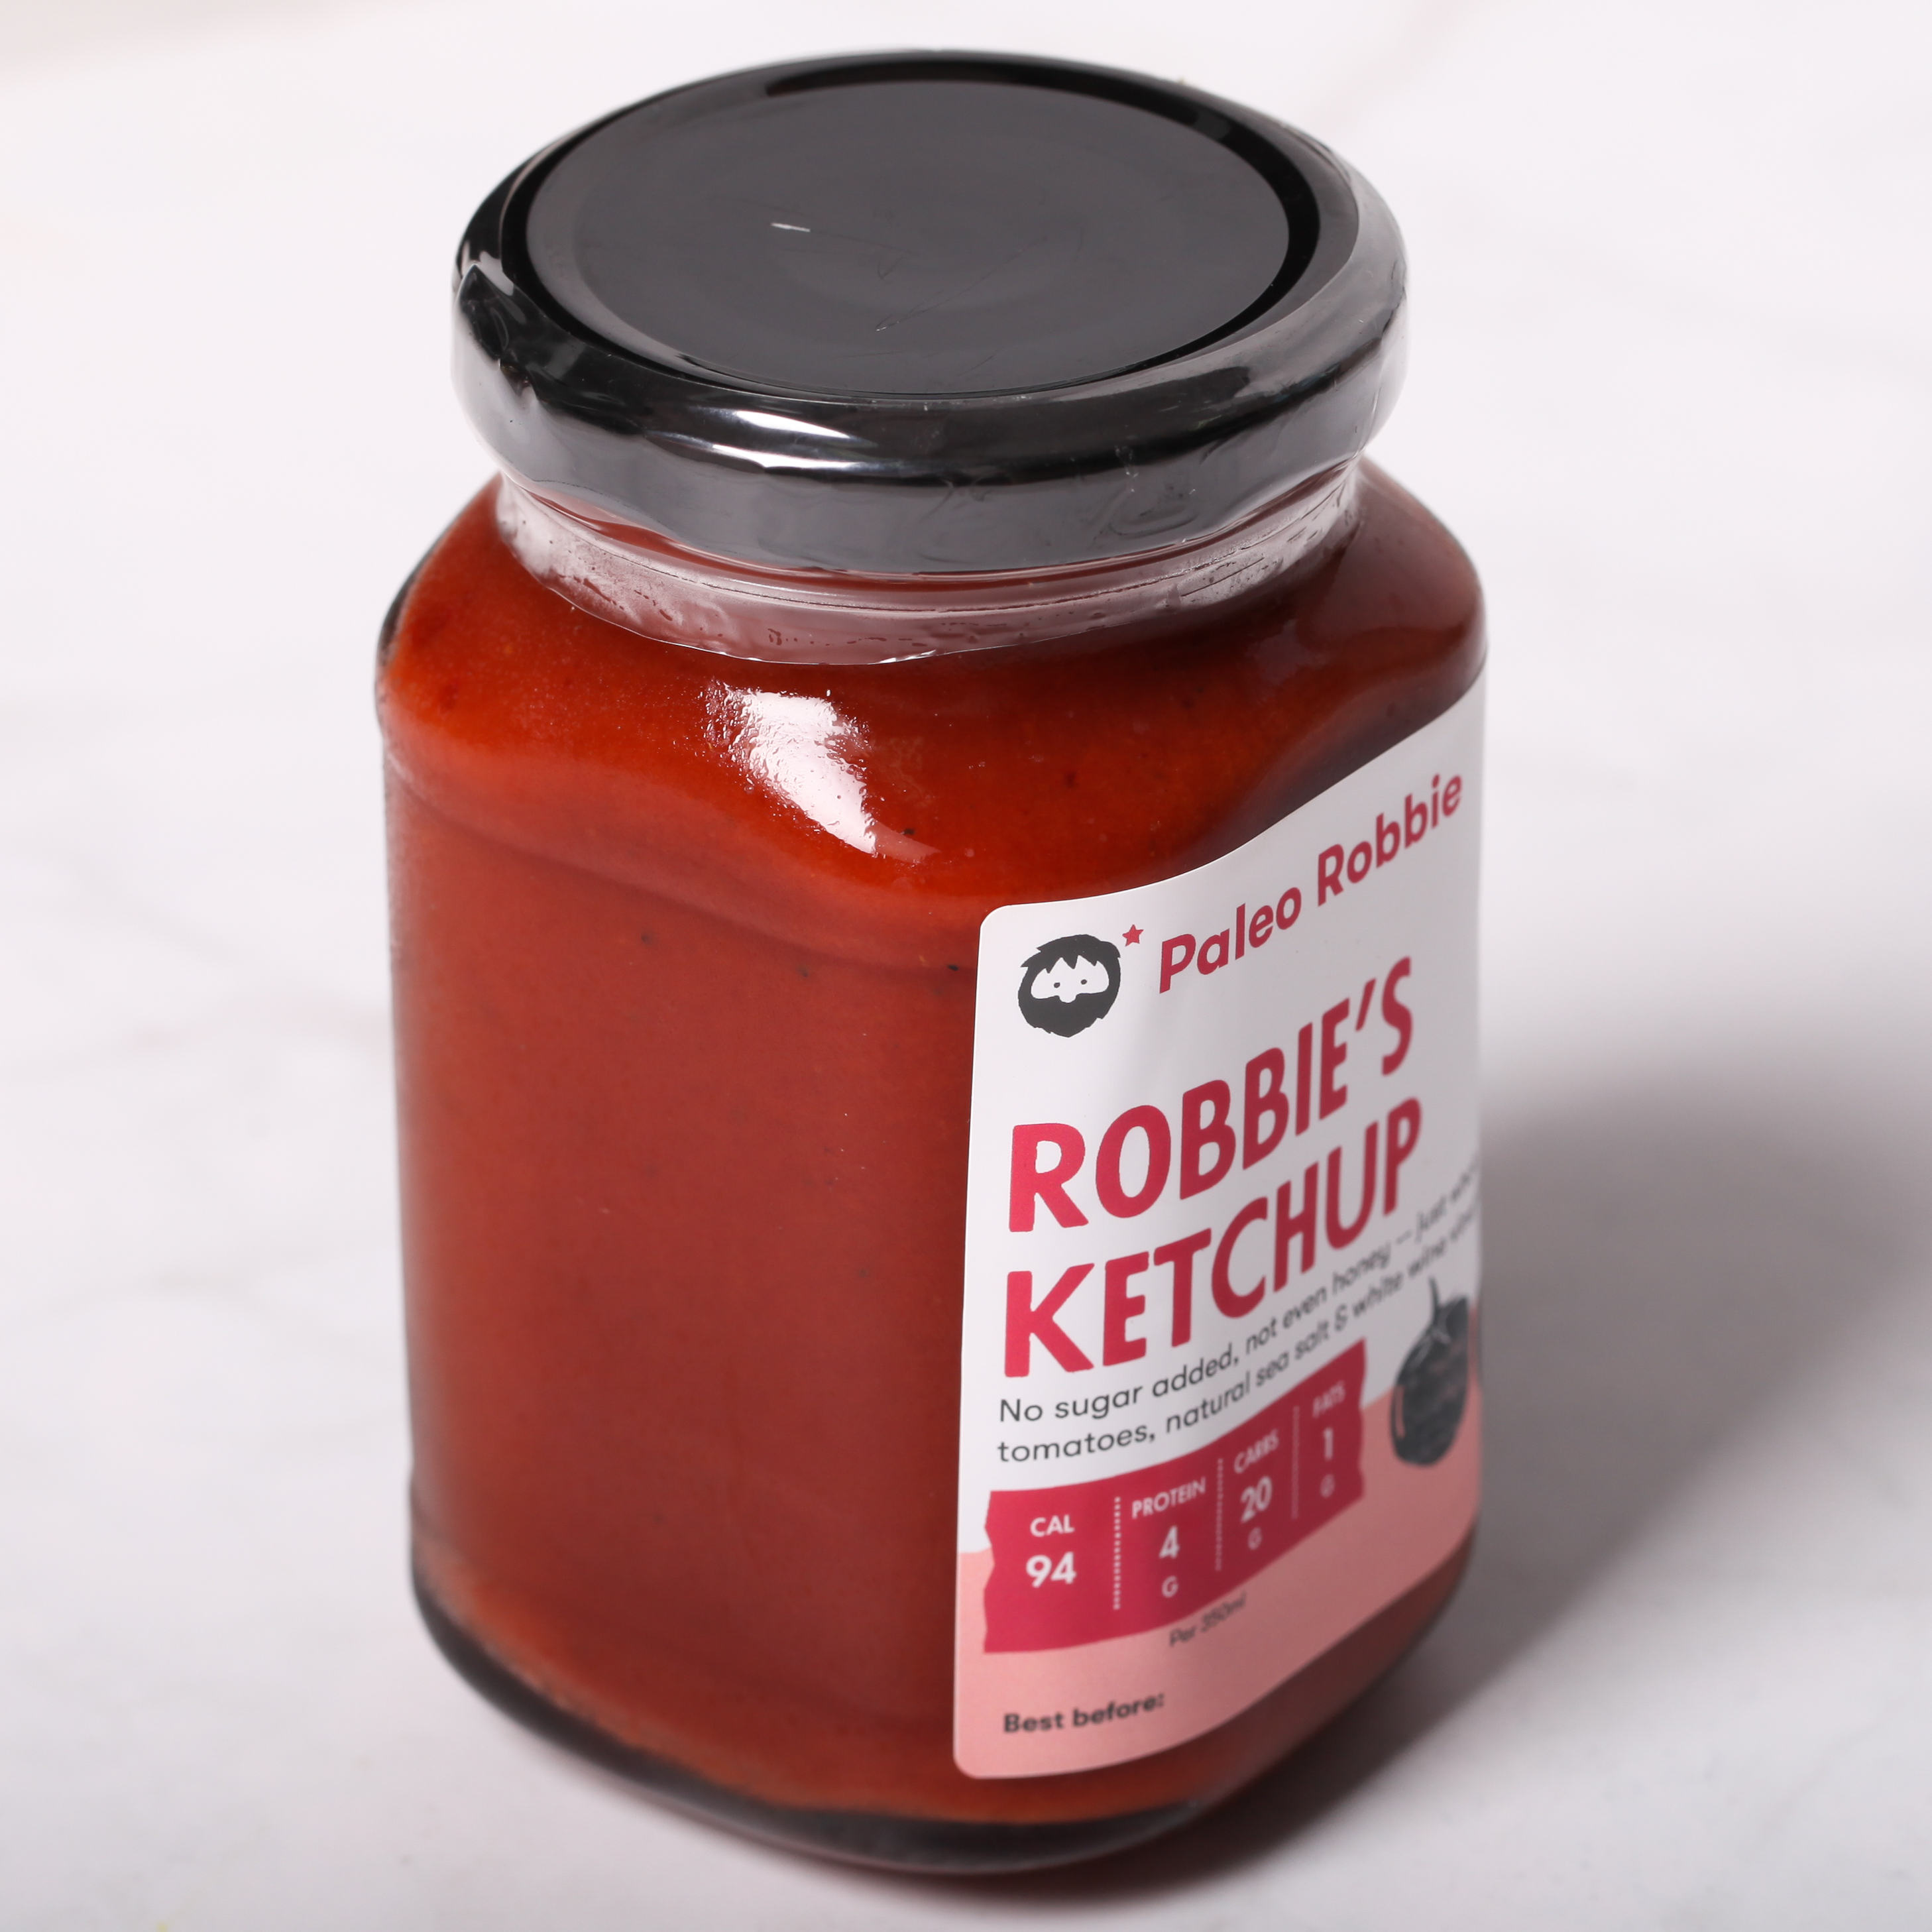 Paleo Robbie's Ketchup